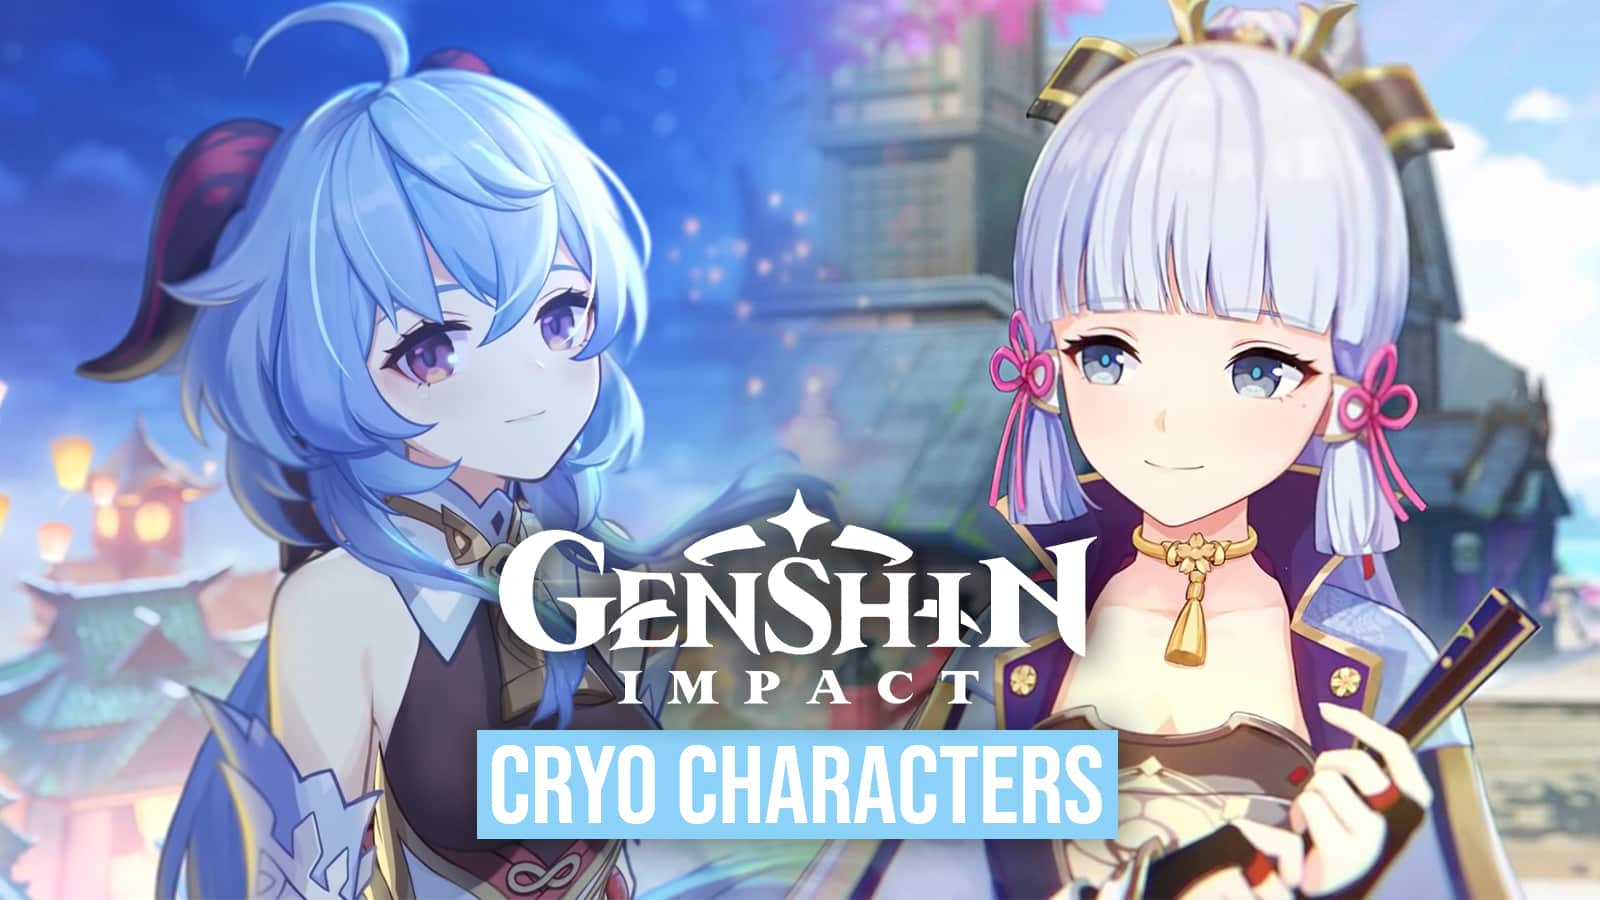 Ganyu and Ayaka looking at each other, Cryo characters in Genshin Impact